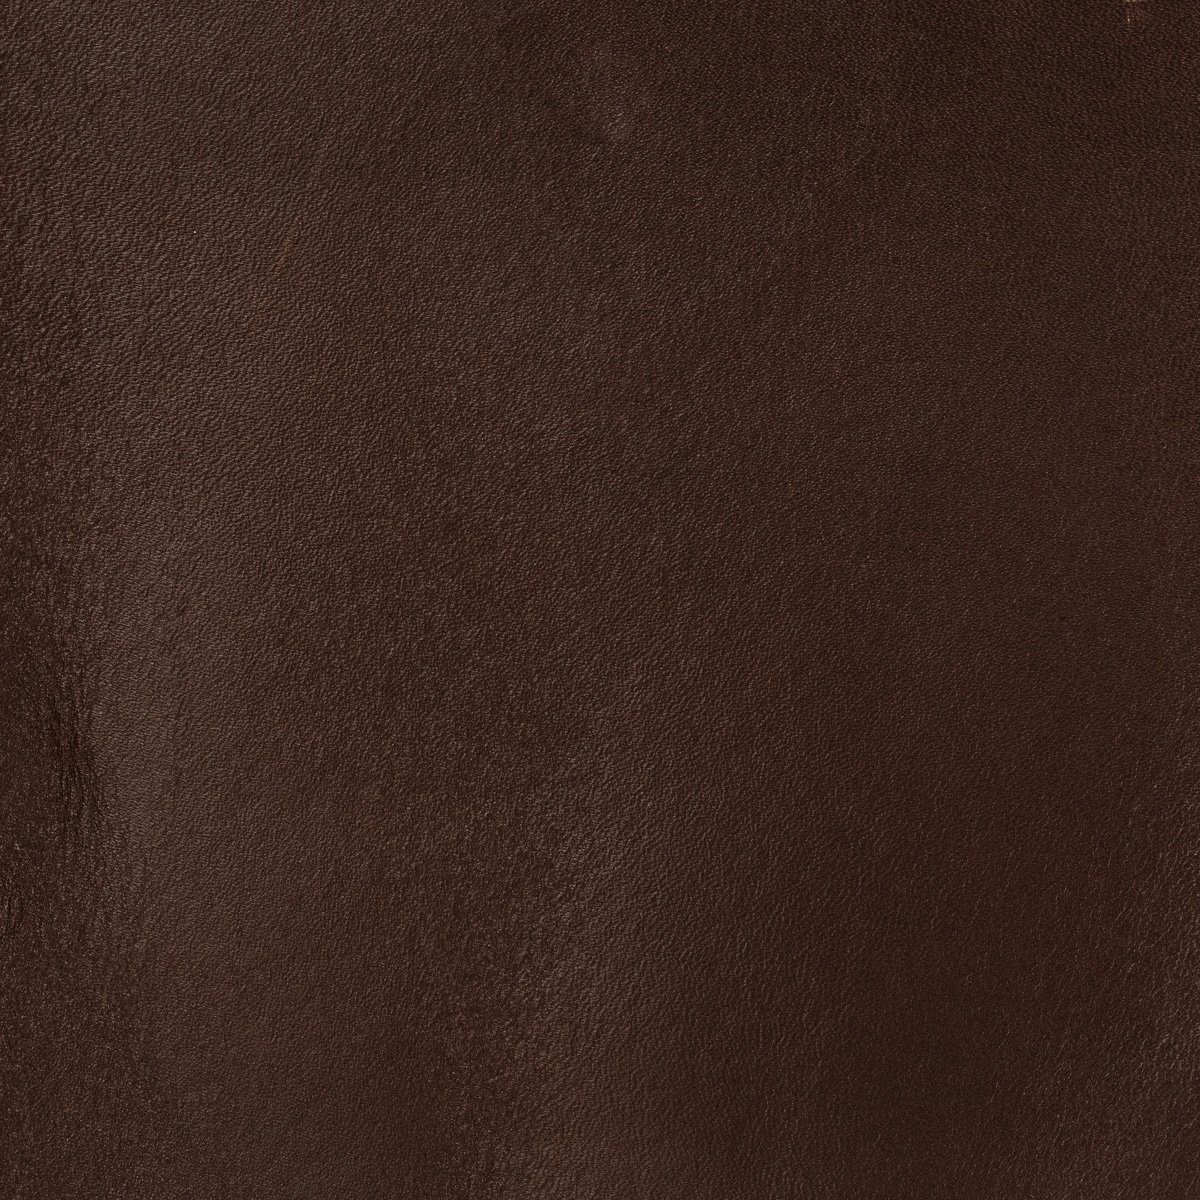 J.FitzPatrick Footwear Antique Brown Calf Leather